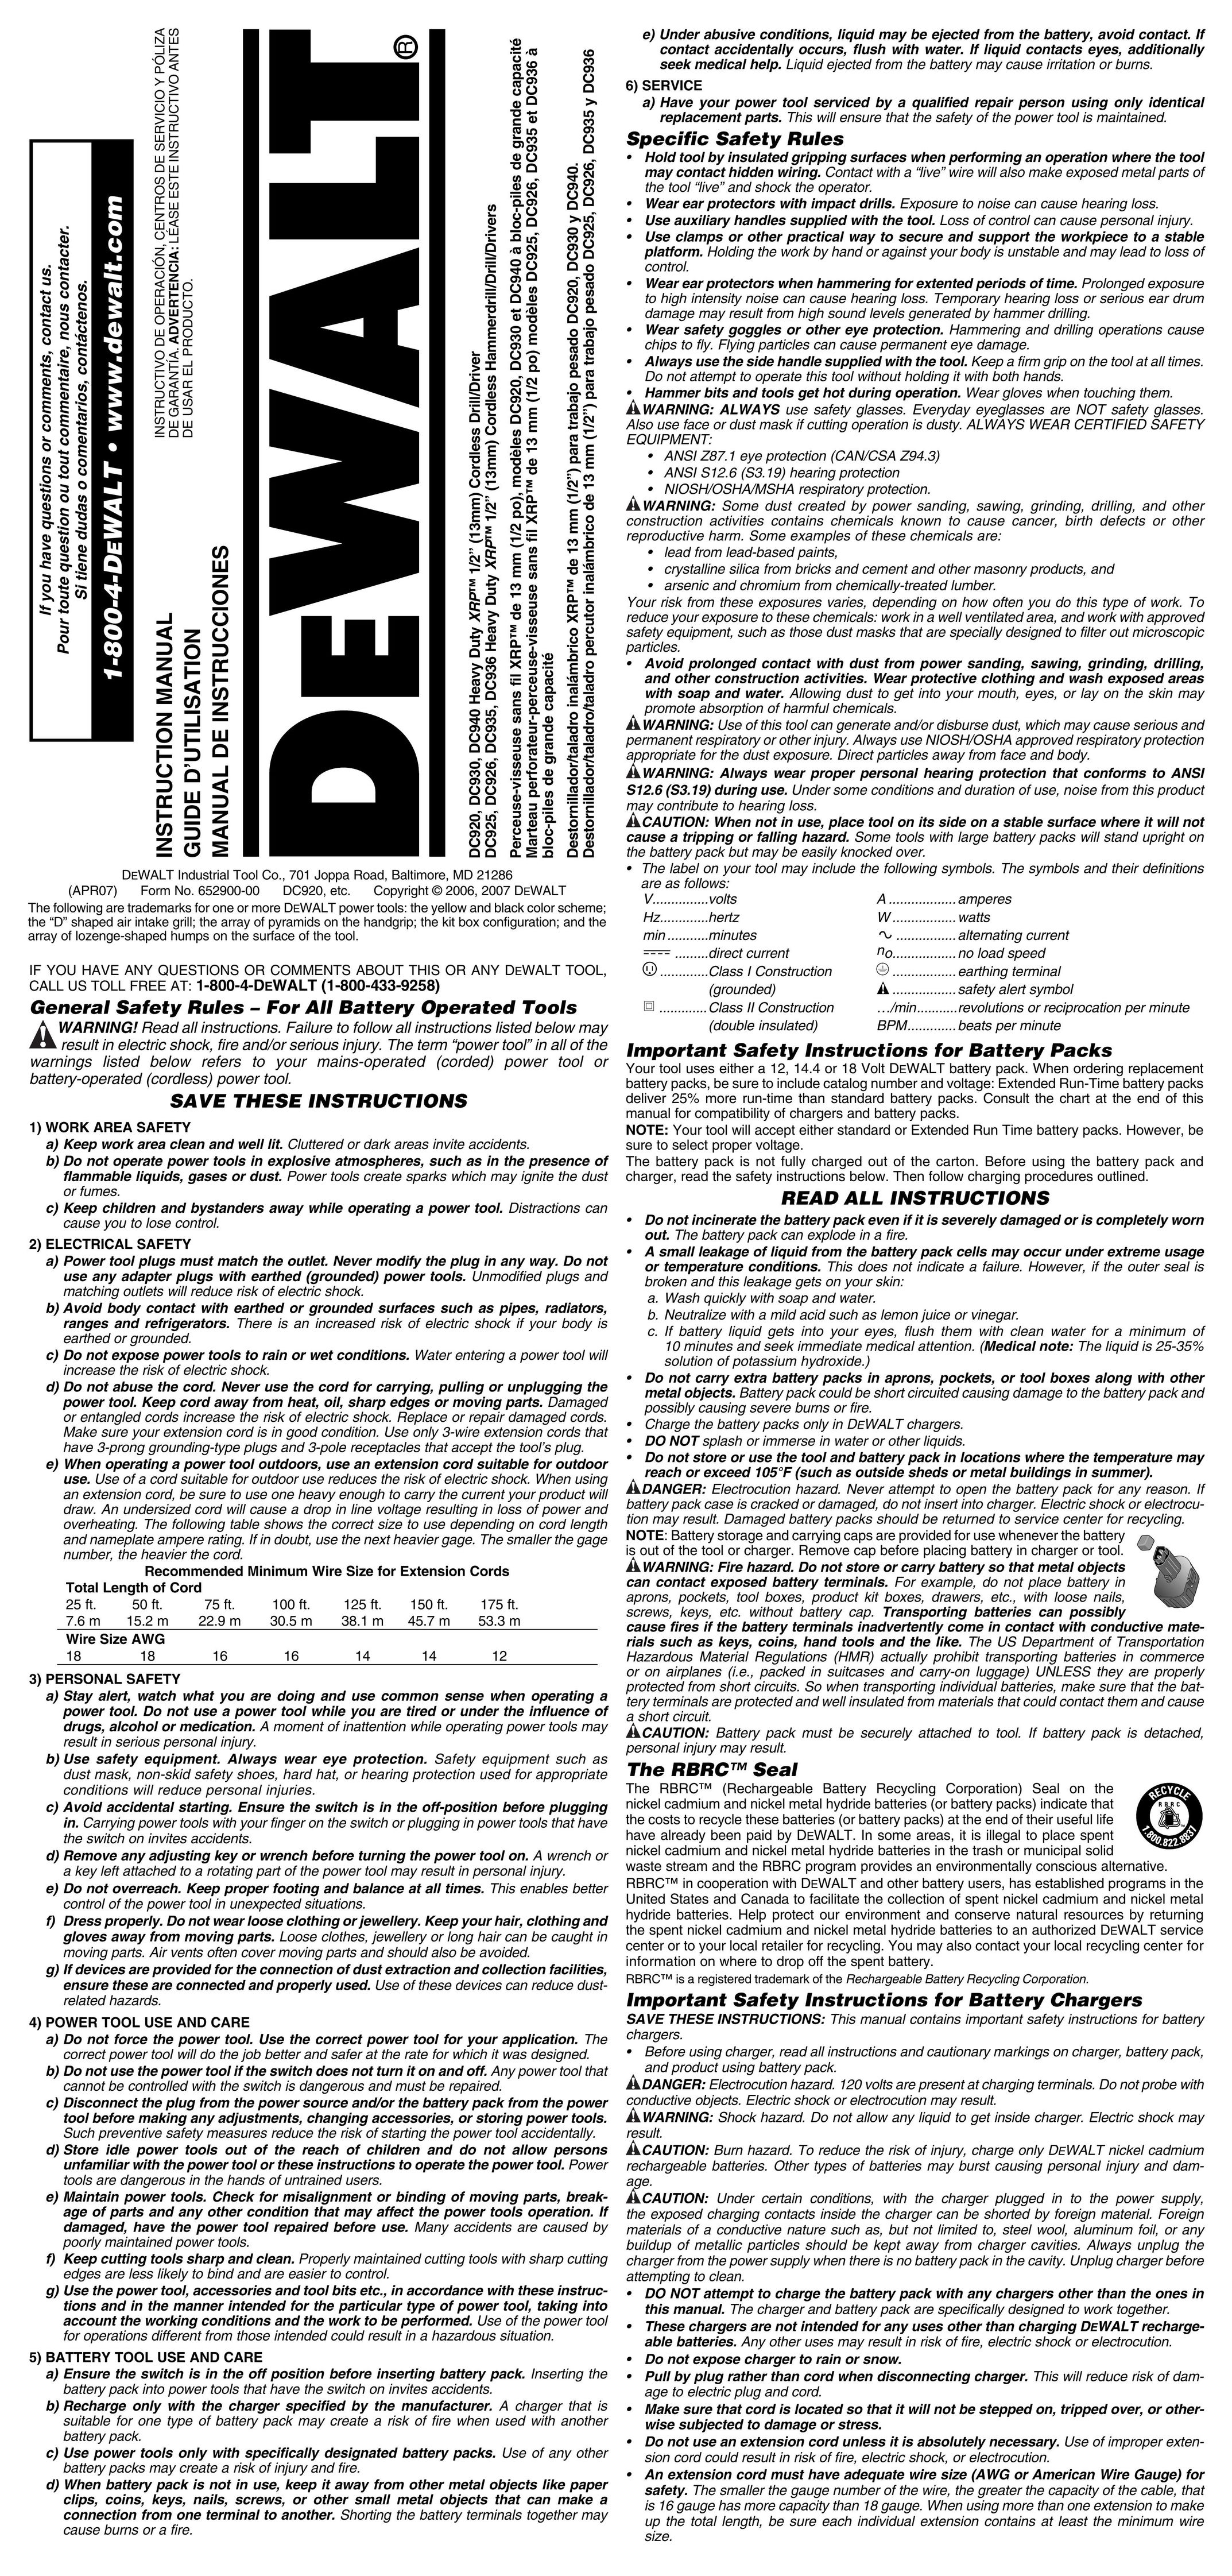 DeWalt DC926 Cordless Drill User Manual